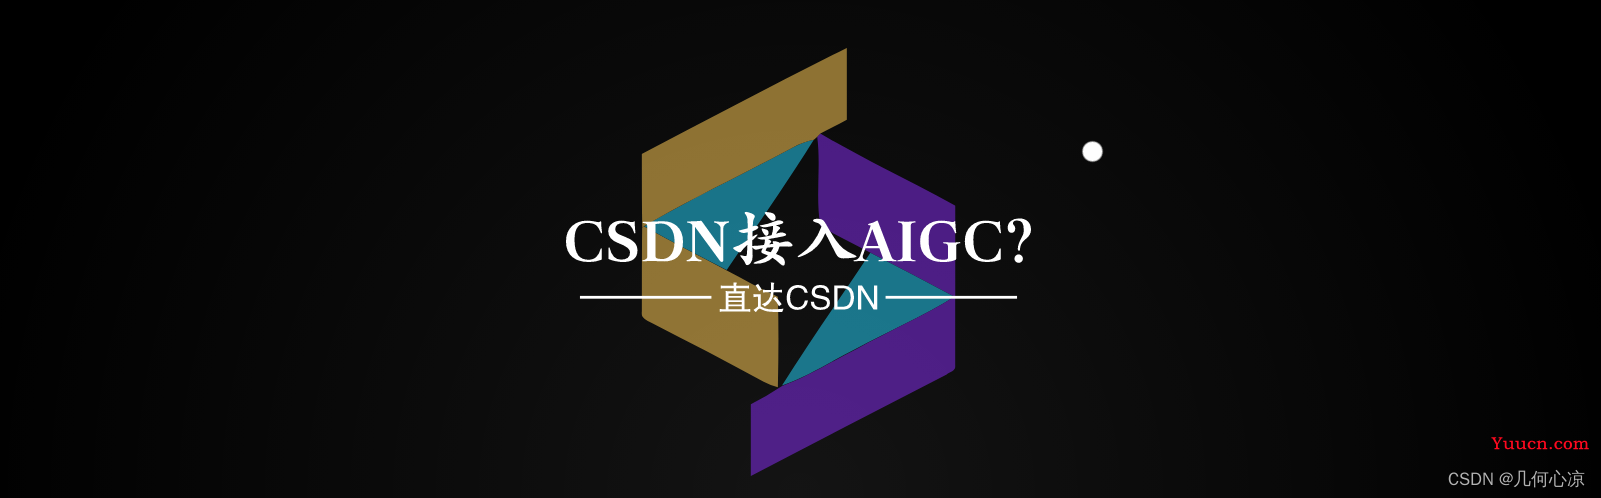 CSDN接入AIGC辅助创作，对此你怎么看？